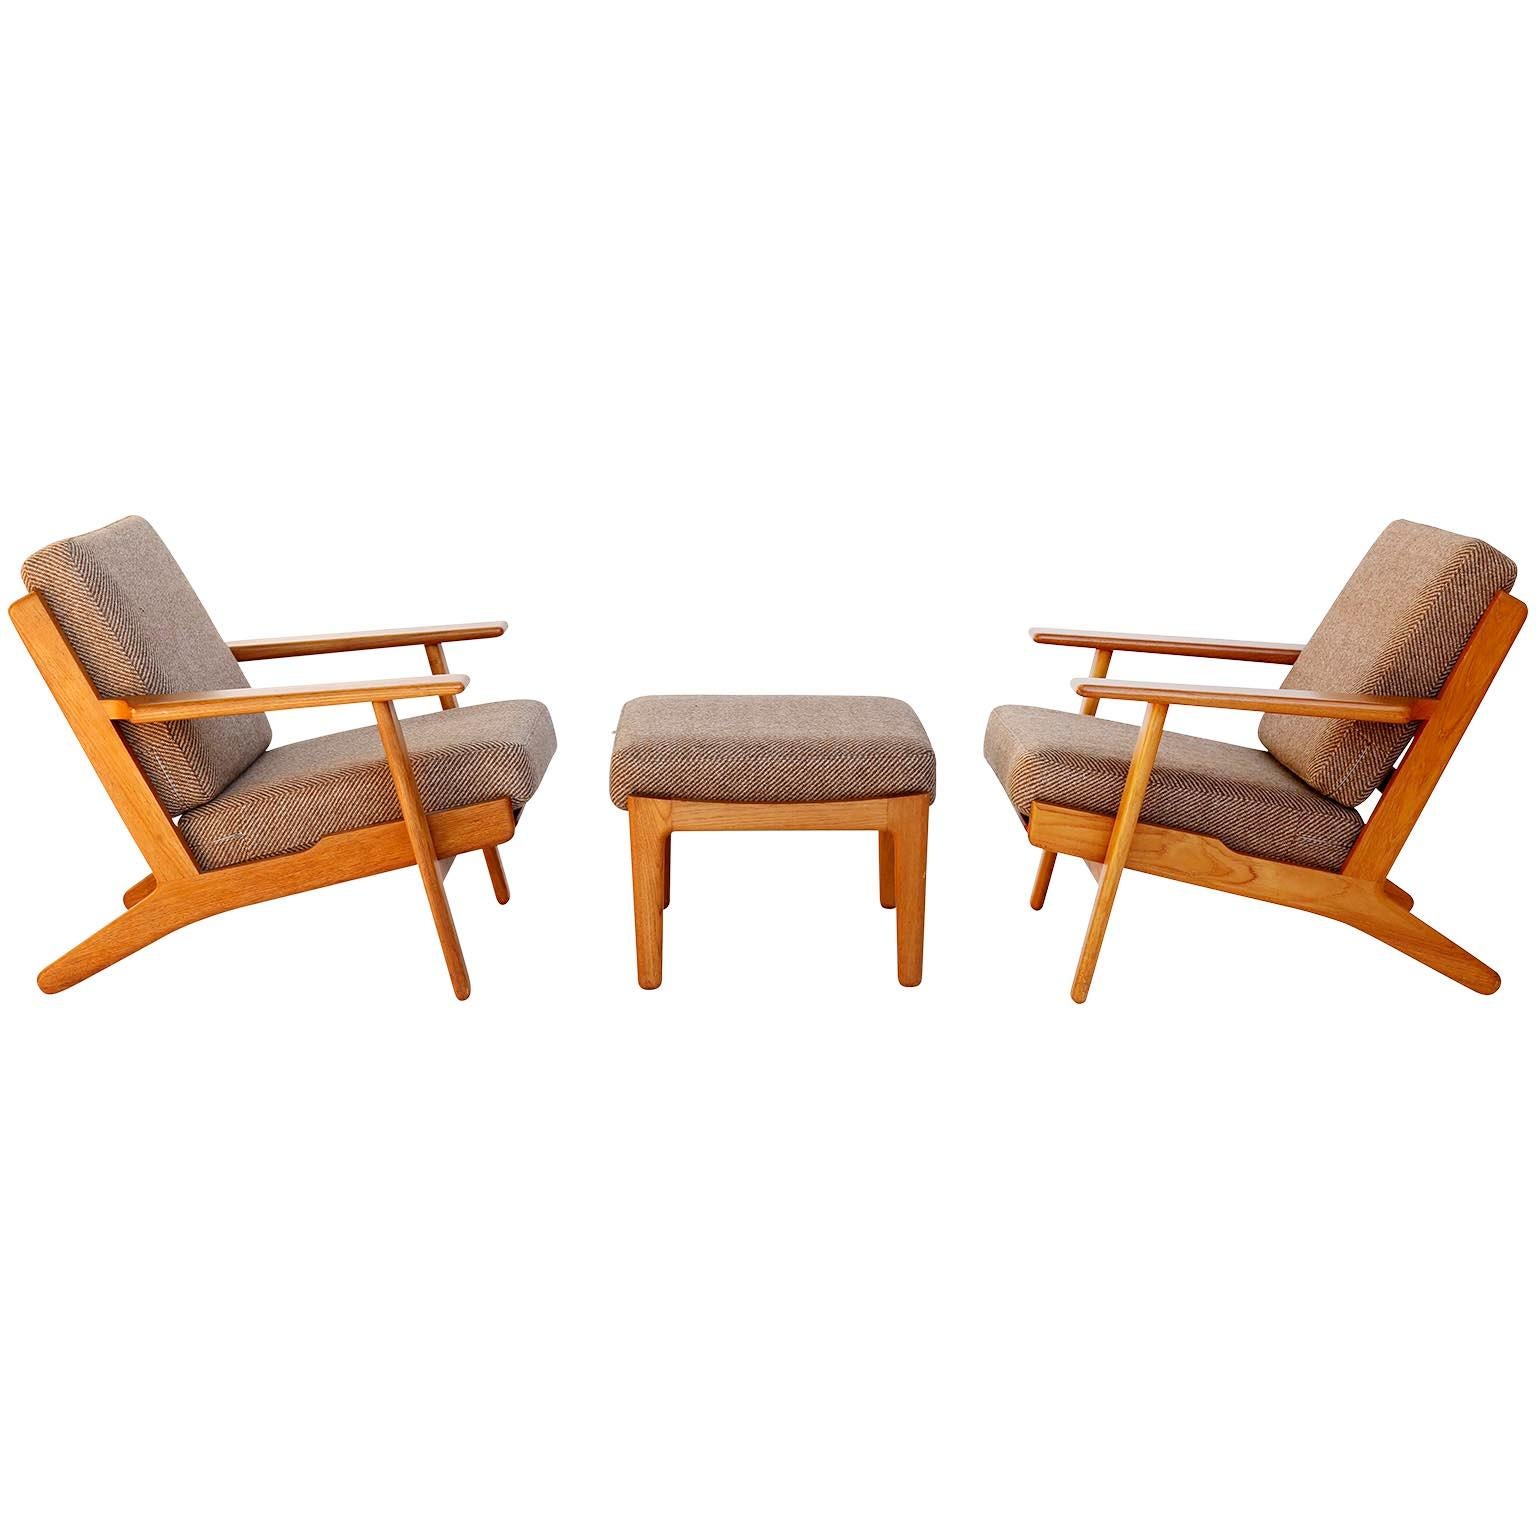 Pair of Hans Wegner Lounge Chairs Ottoman GE290 GETAMA, Teak, Denmark, 1953